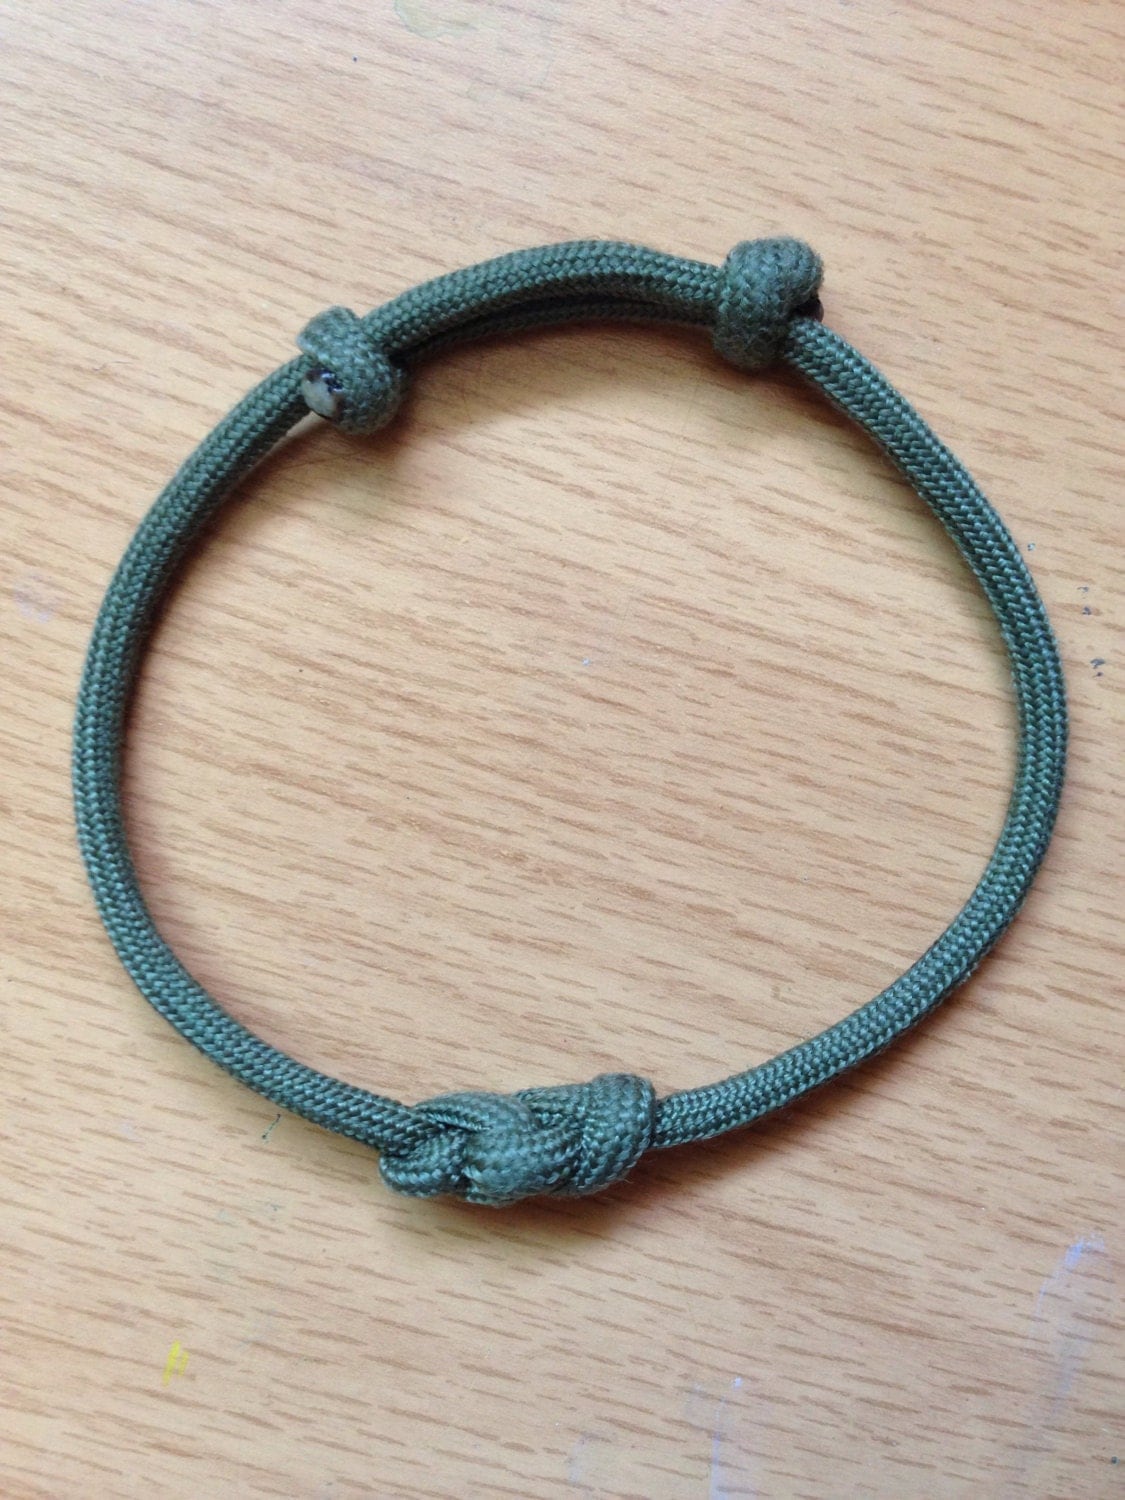 Paracord Infinity knot bracelet single strand by CordForge on Etsy